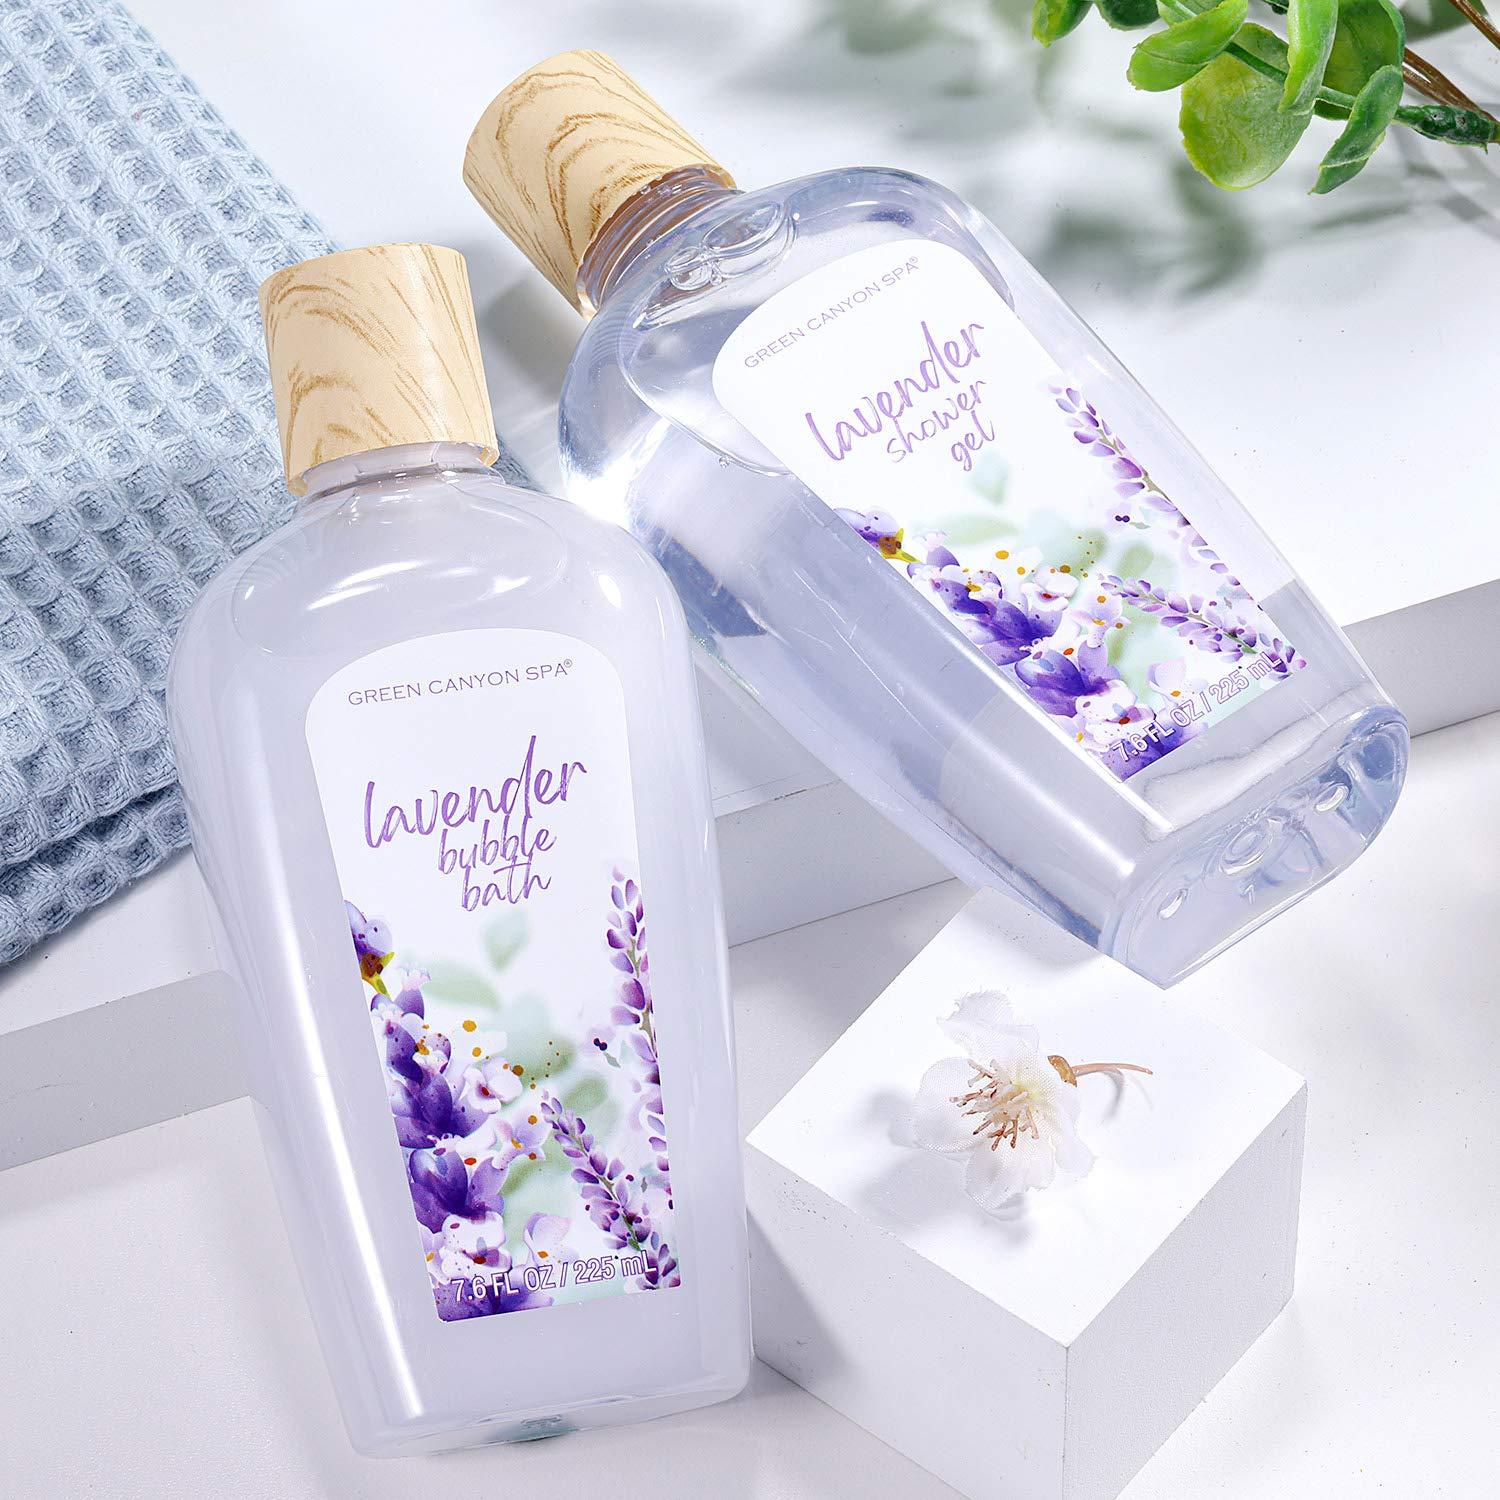 Green Canyon Spa Gift Sets Lavender Bath Set